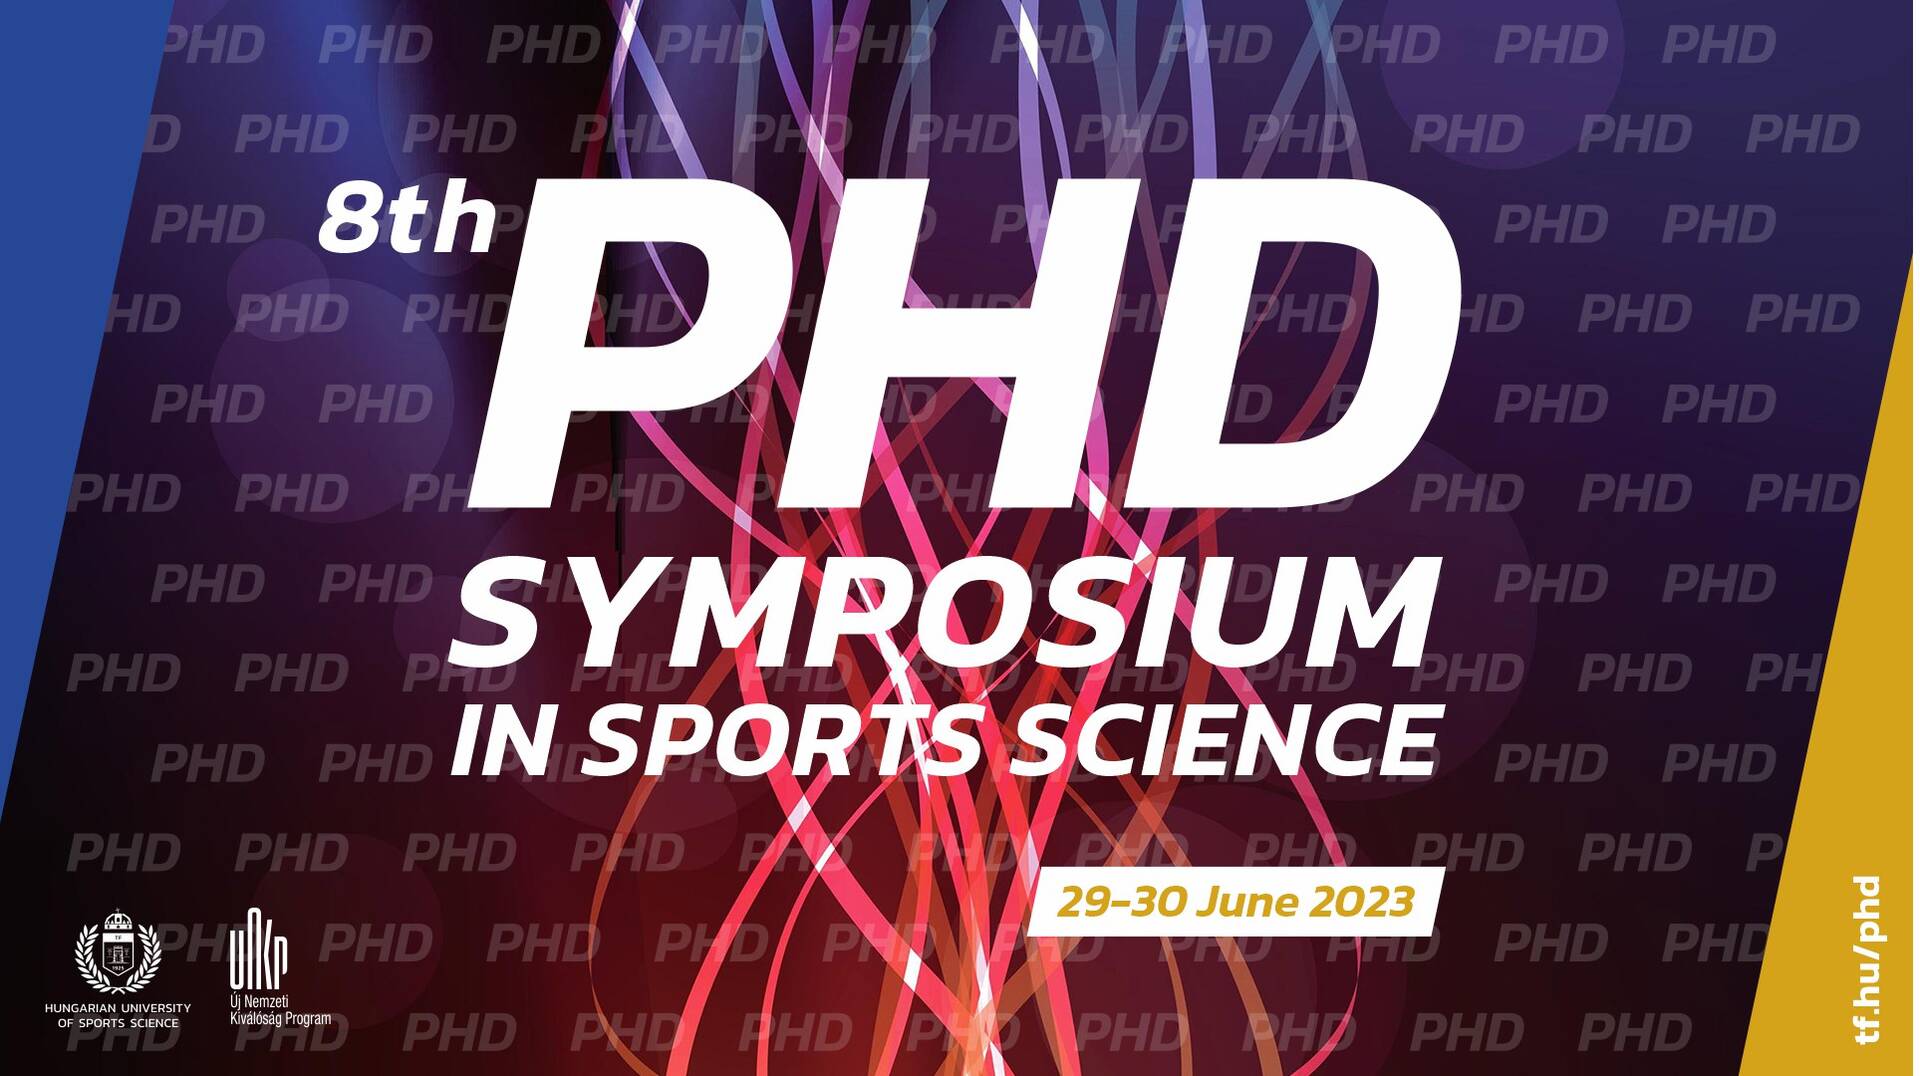 Call for application: PhD Symposium 2023